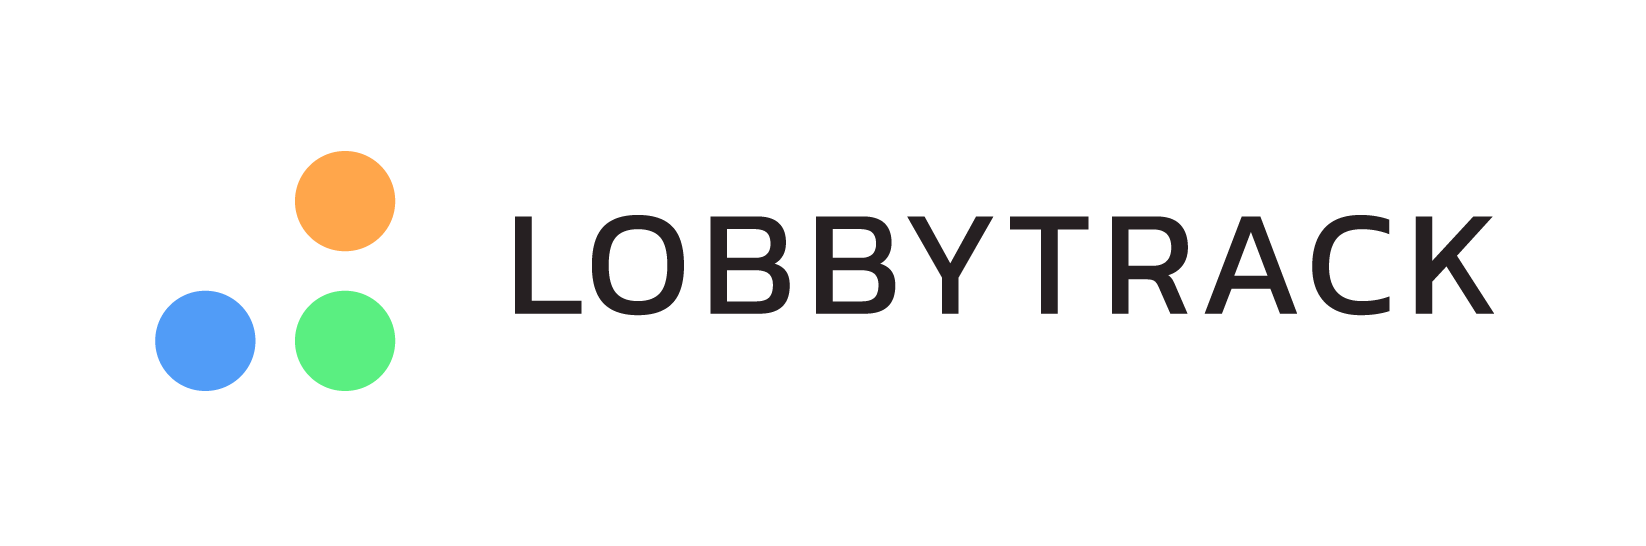 Lobbytrack Visitor Management